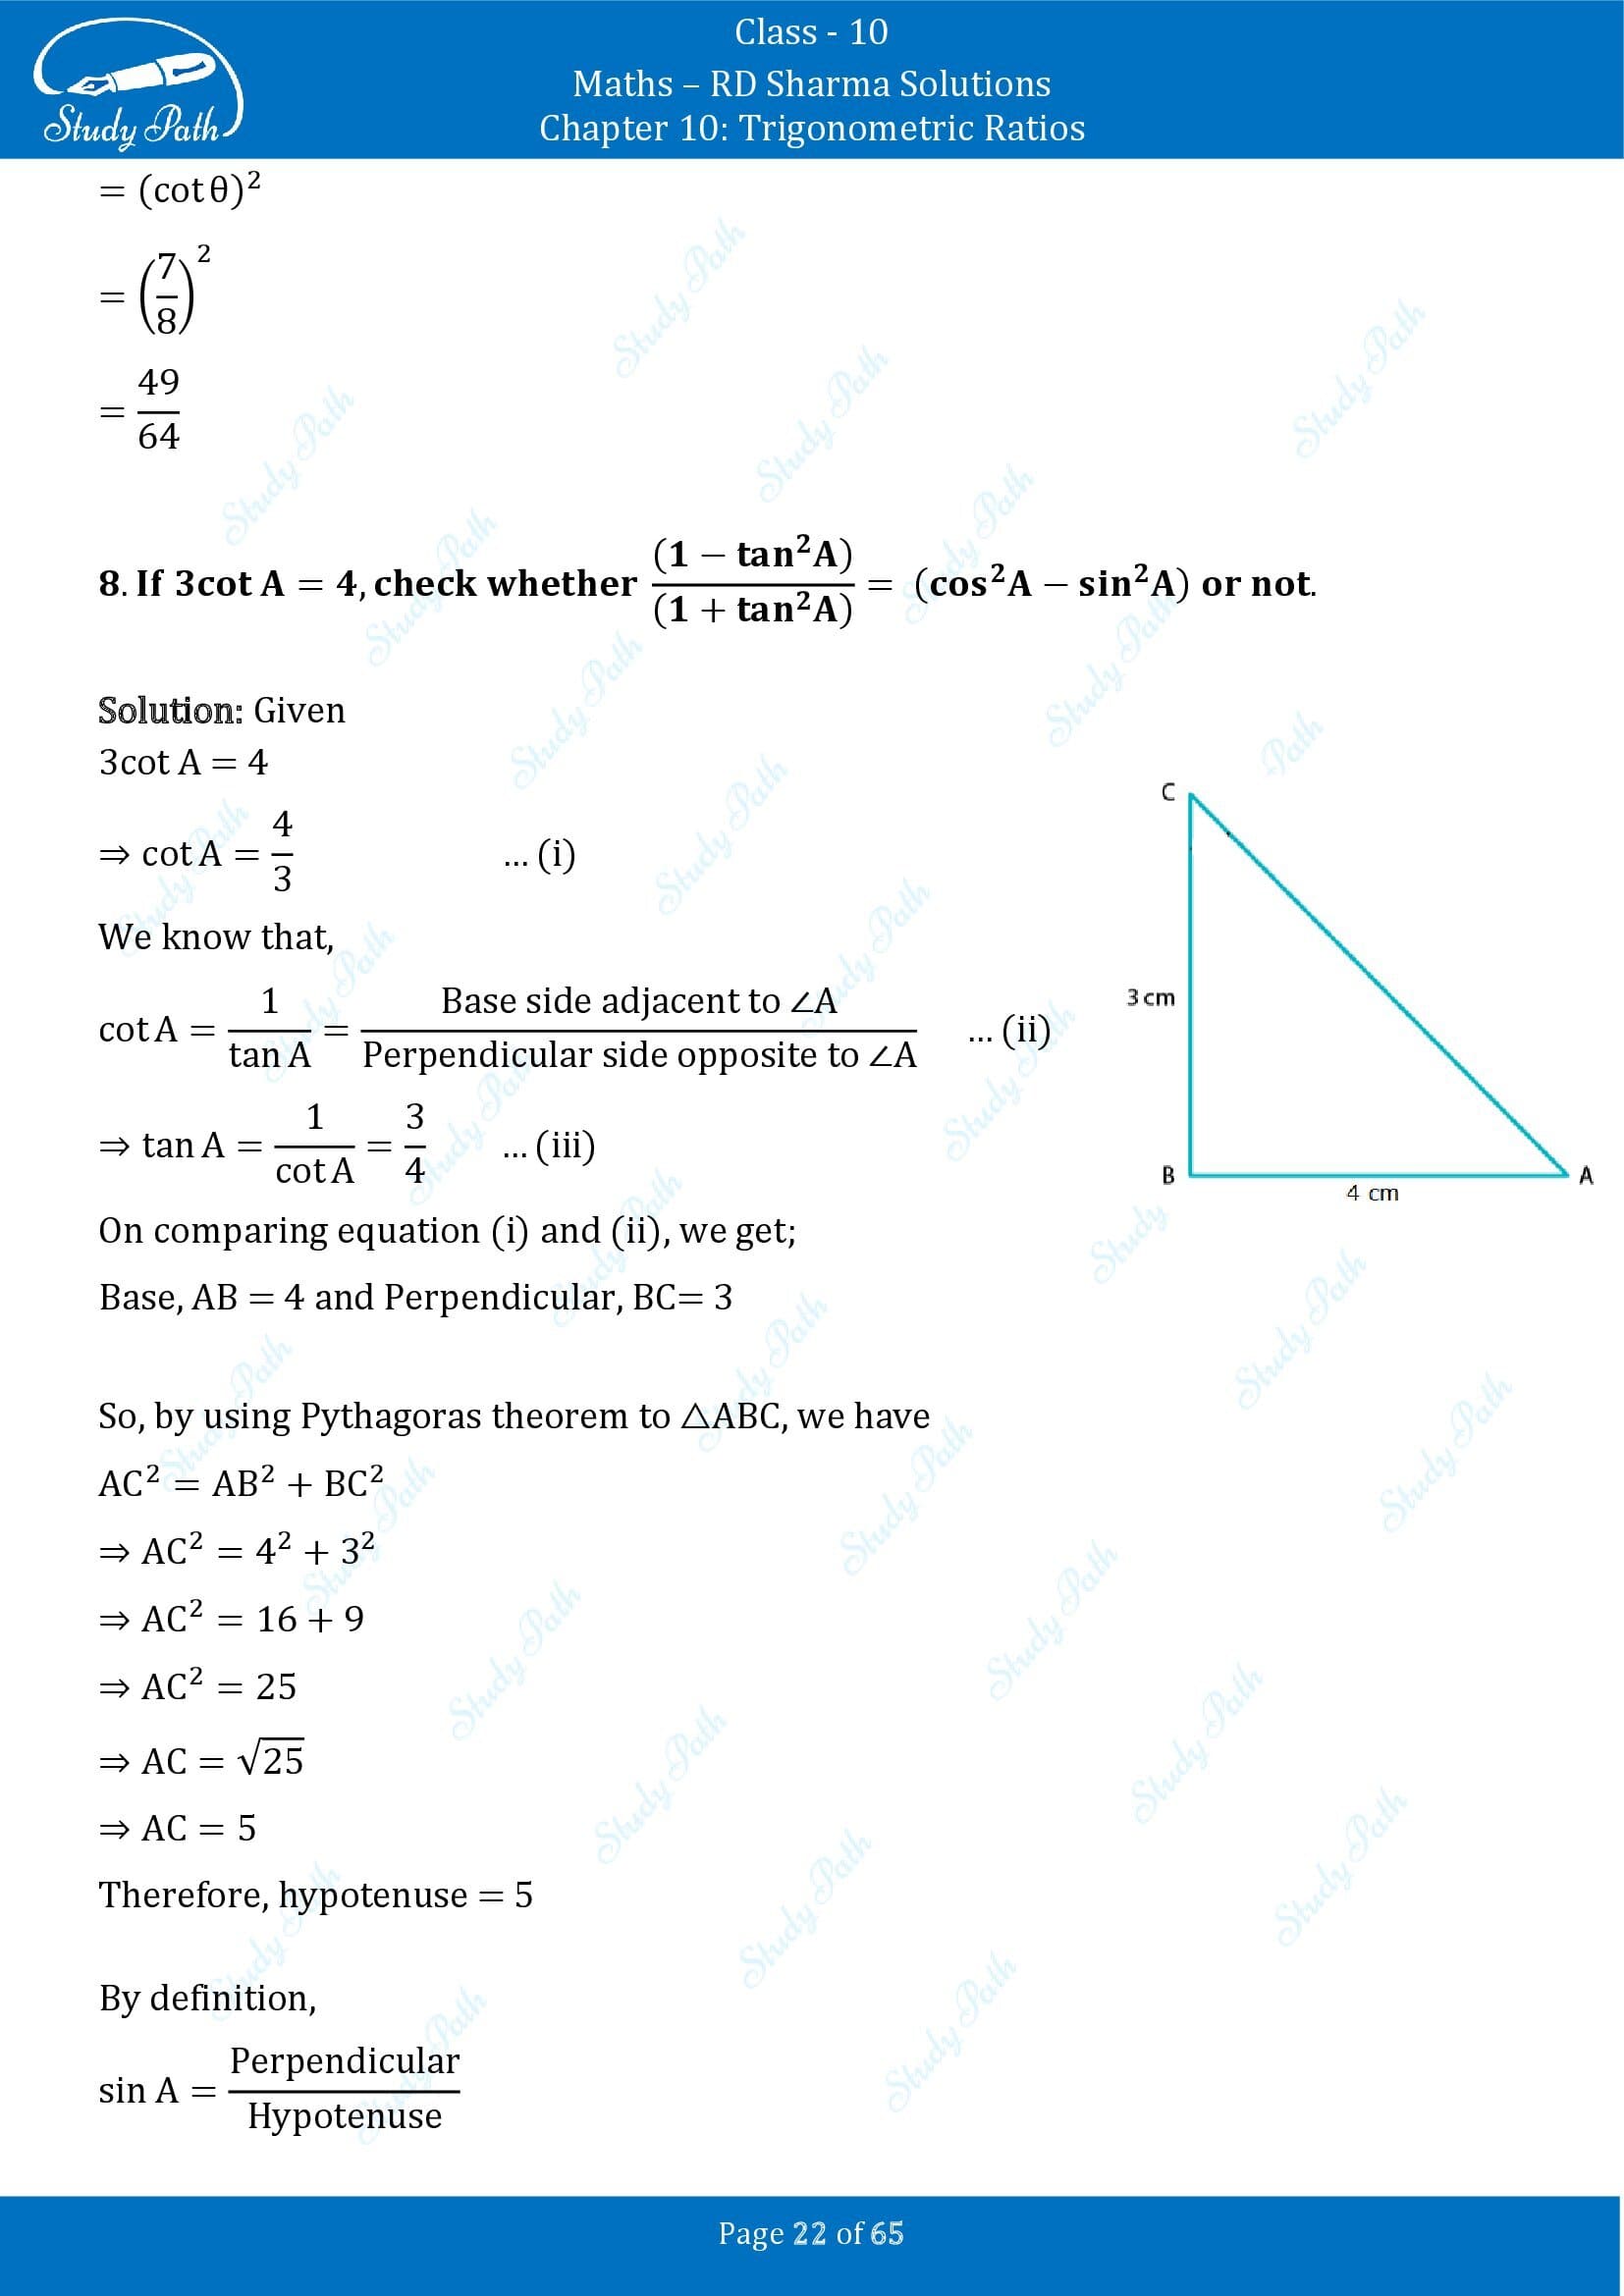 RD Sharma Solutions Class 10 Chapter 10 Trigonometric Ratios Exercise 10.1 00022